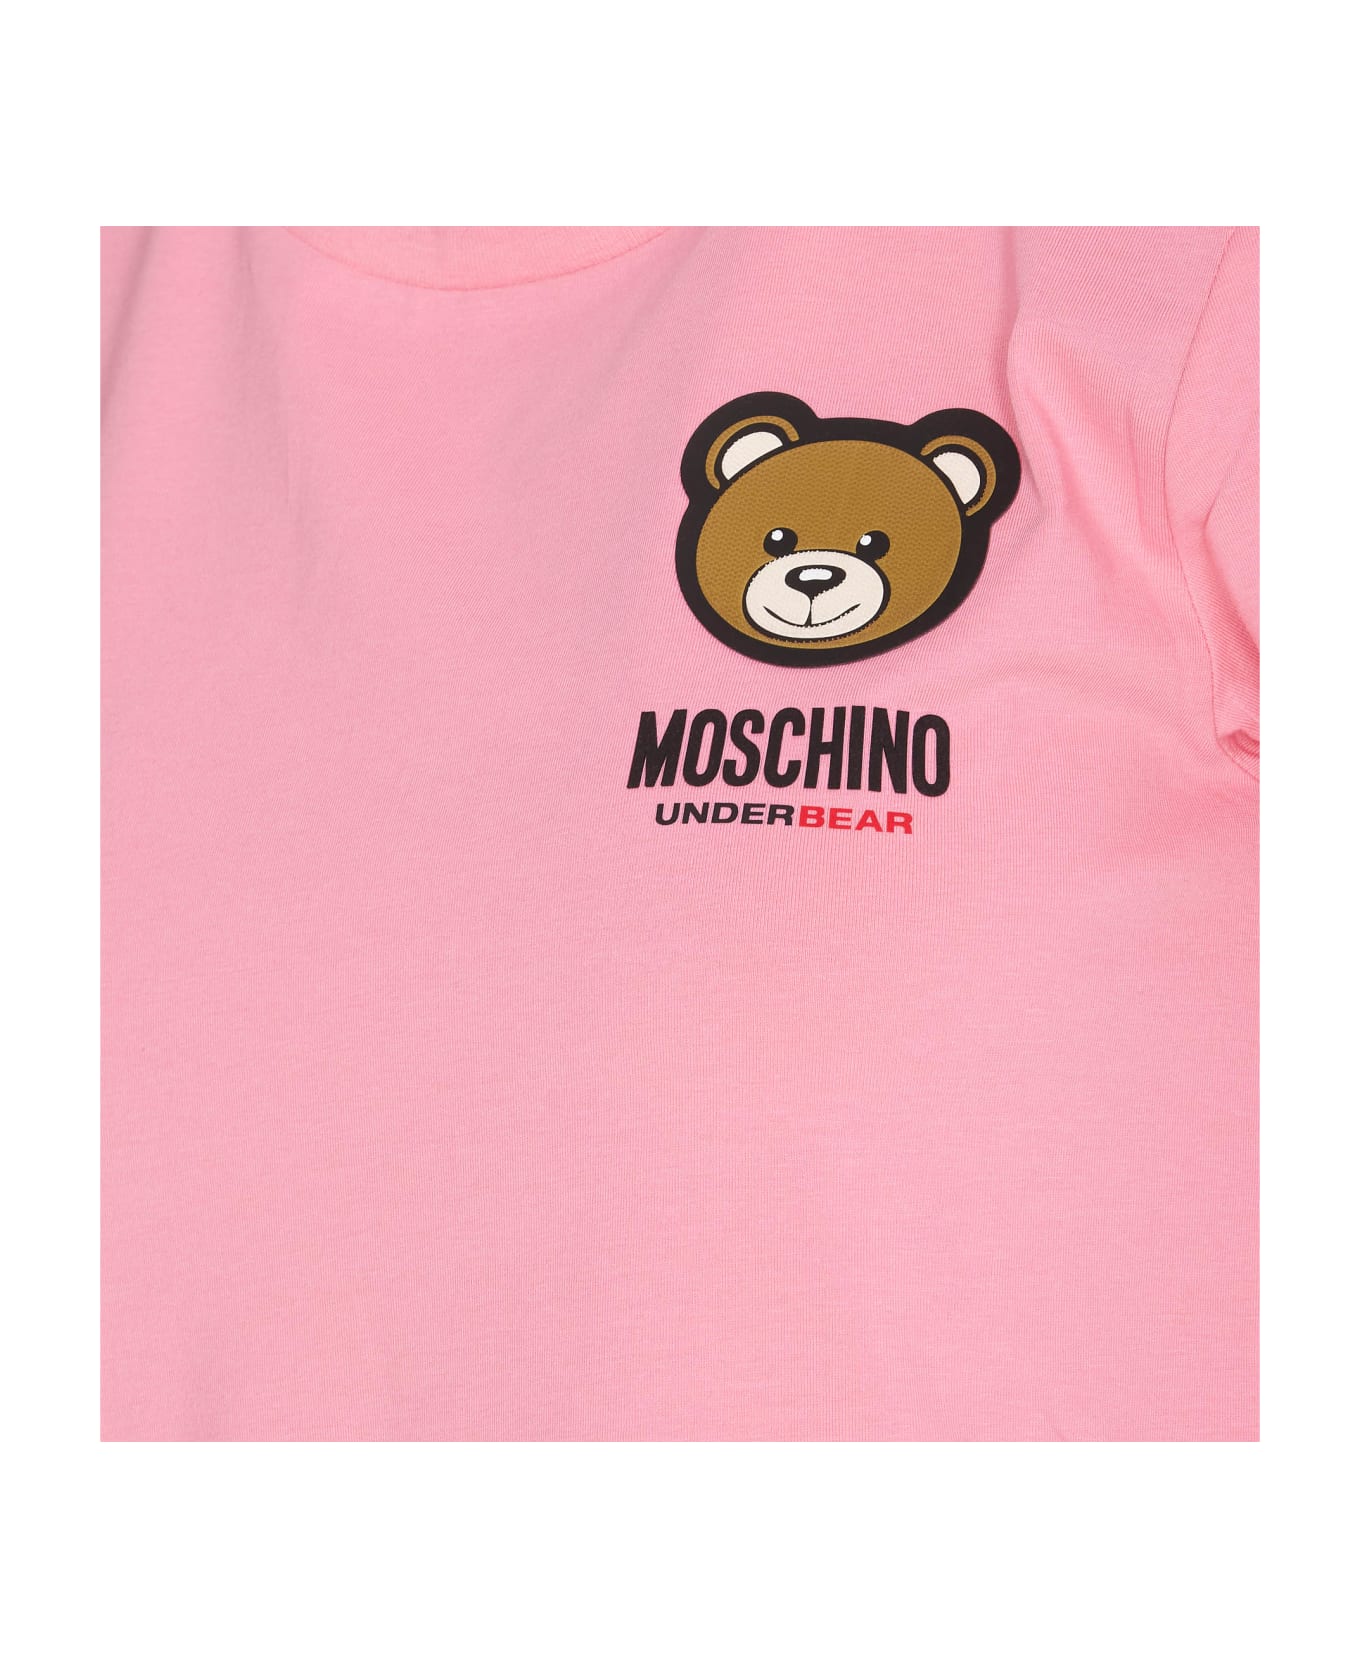 Moschino Underbear Logo T-shirt - Pink